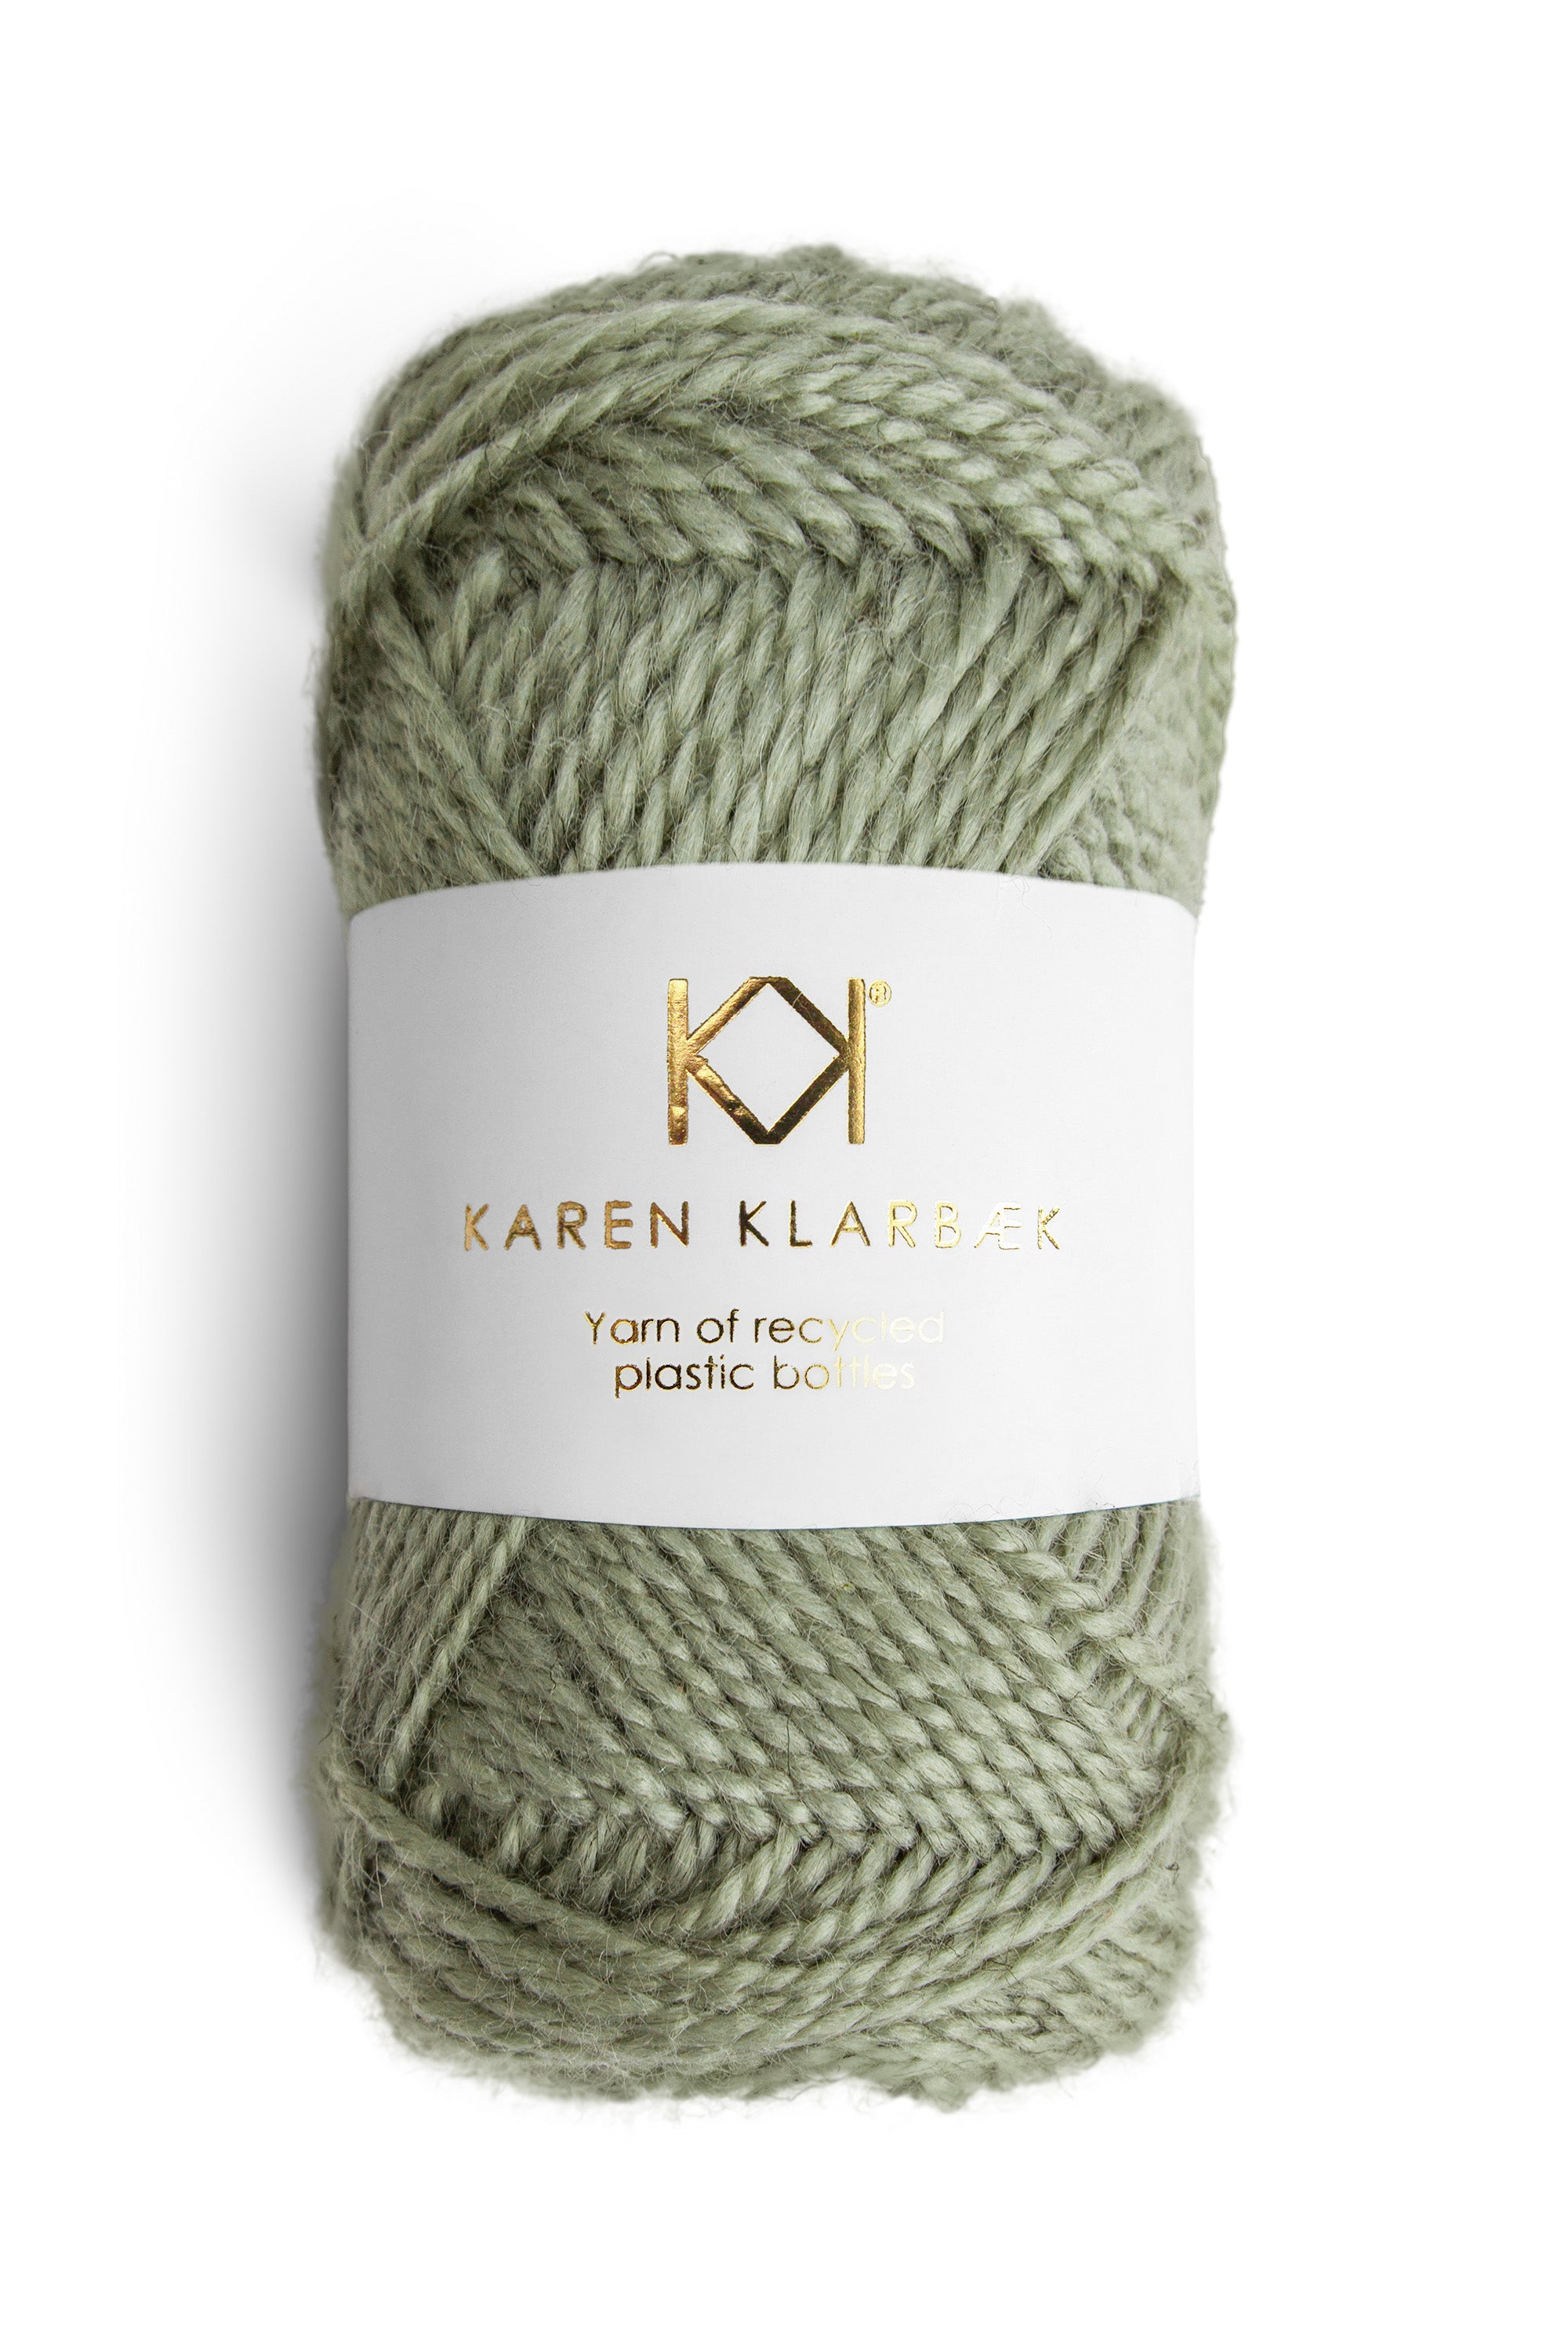 The Wool Sage green